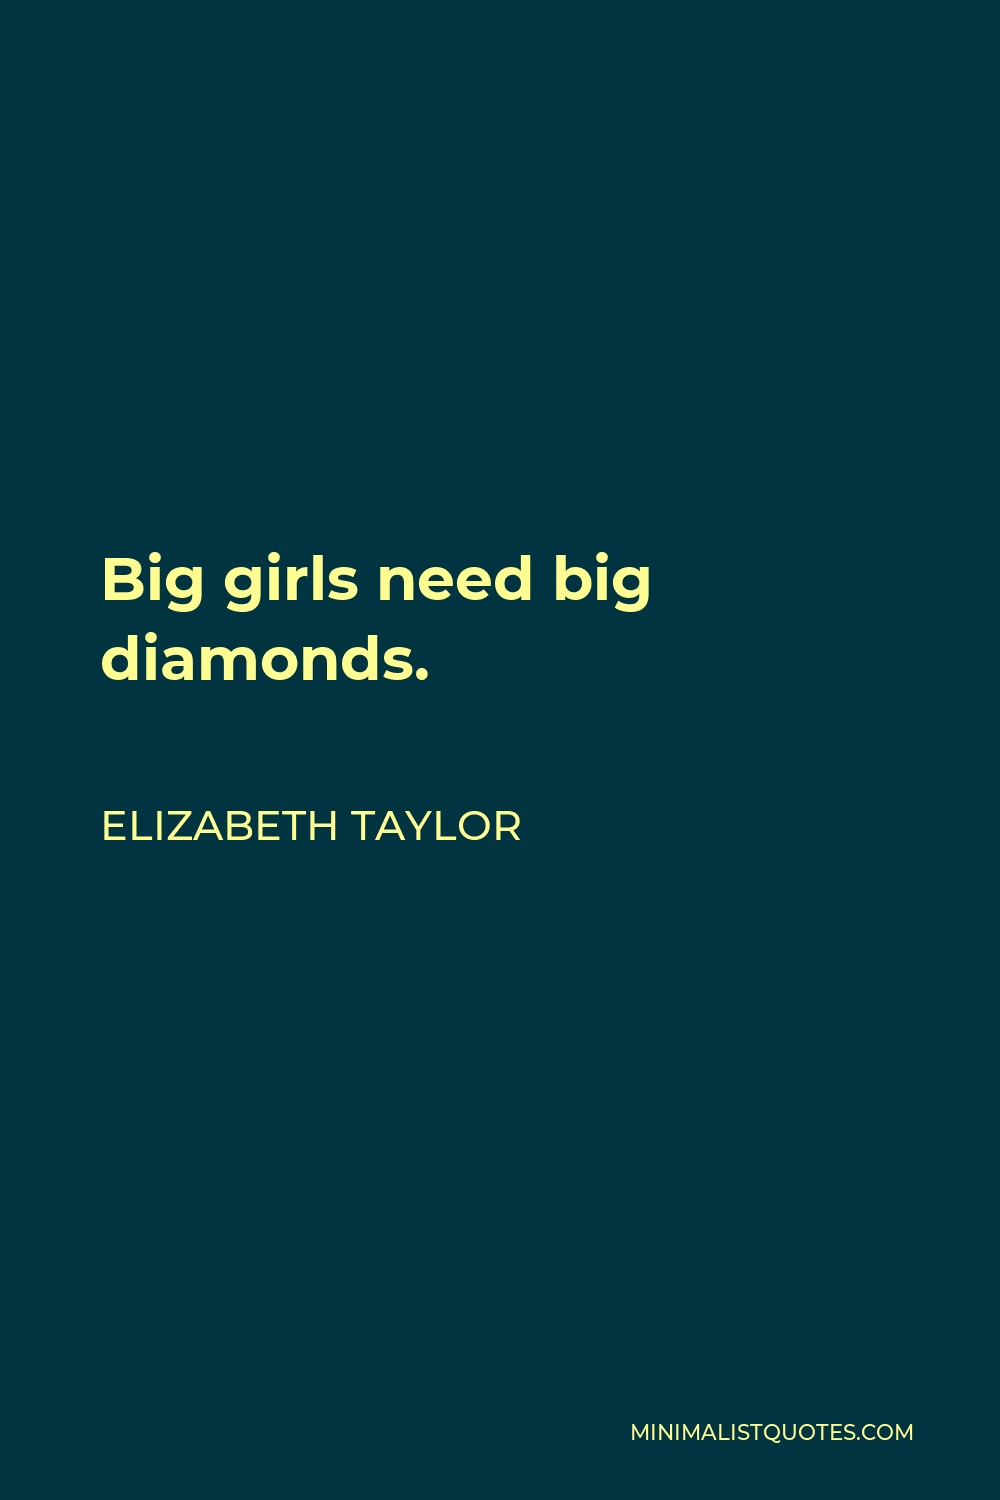 Elizabeth Taylor Quote - Big girls need big diamonds.